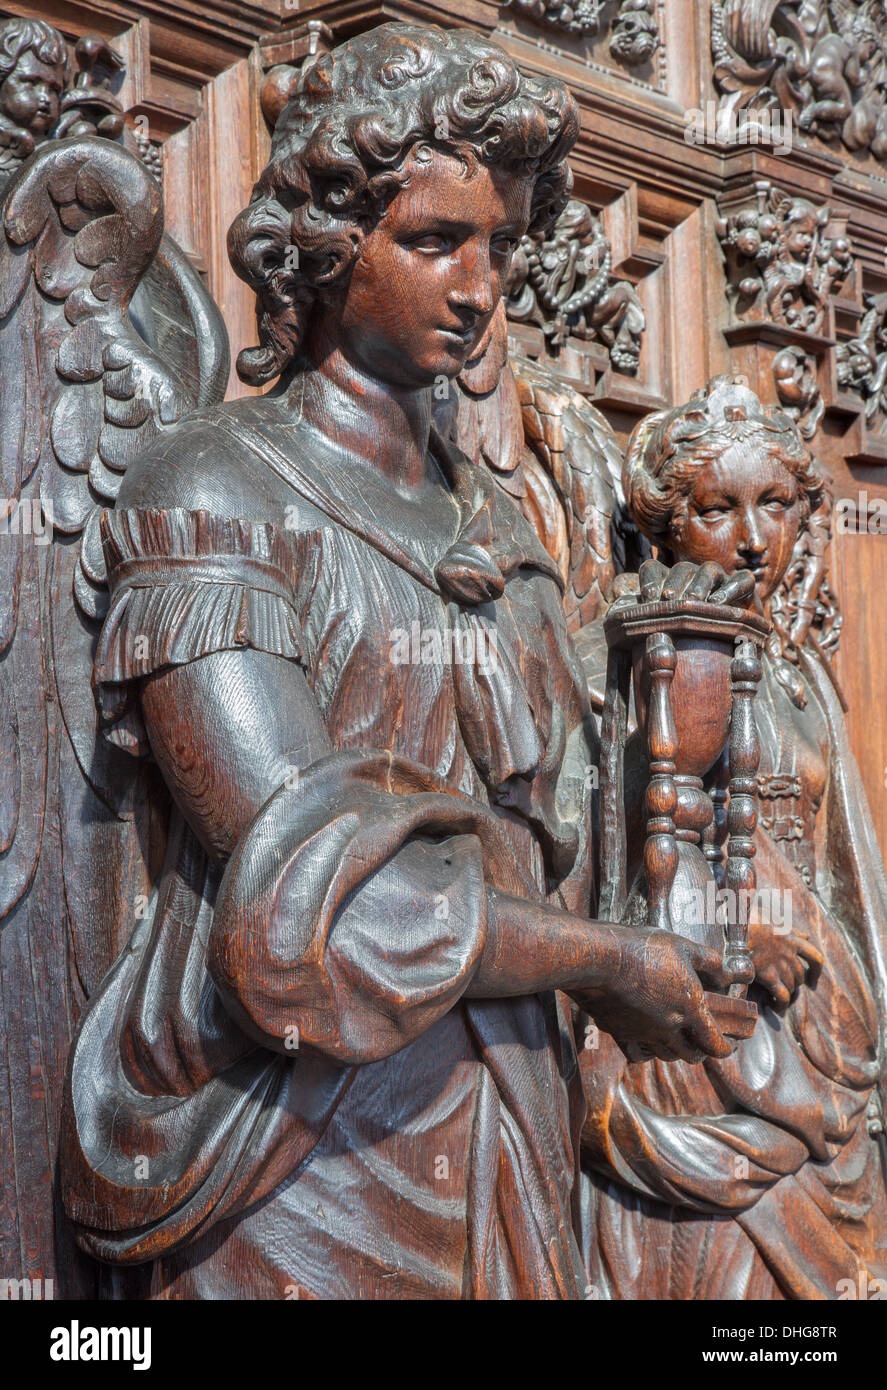 ANTWERP, BELGIUM - SEPTEMBER 5: Statue of angel as symbol of Hope - cardinal virtous in St. Pauls church (Paulskerk) Stock Photo